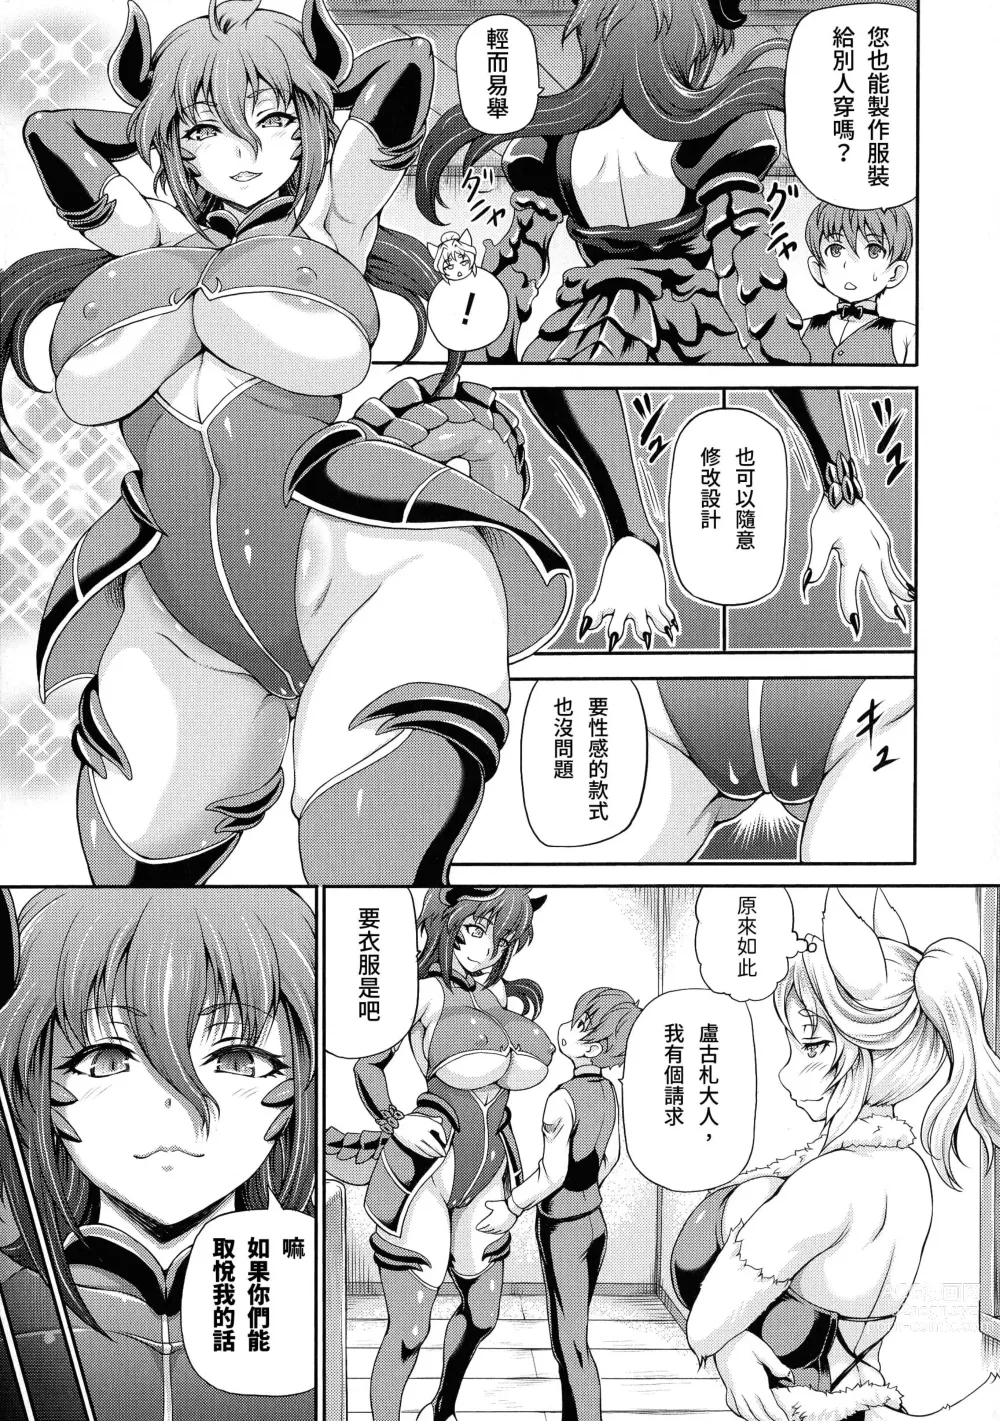 Page 7 of manga Isekai Shoukan 2 Ch. 1-4, 6-8